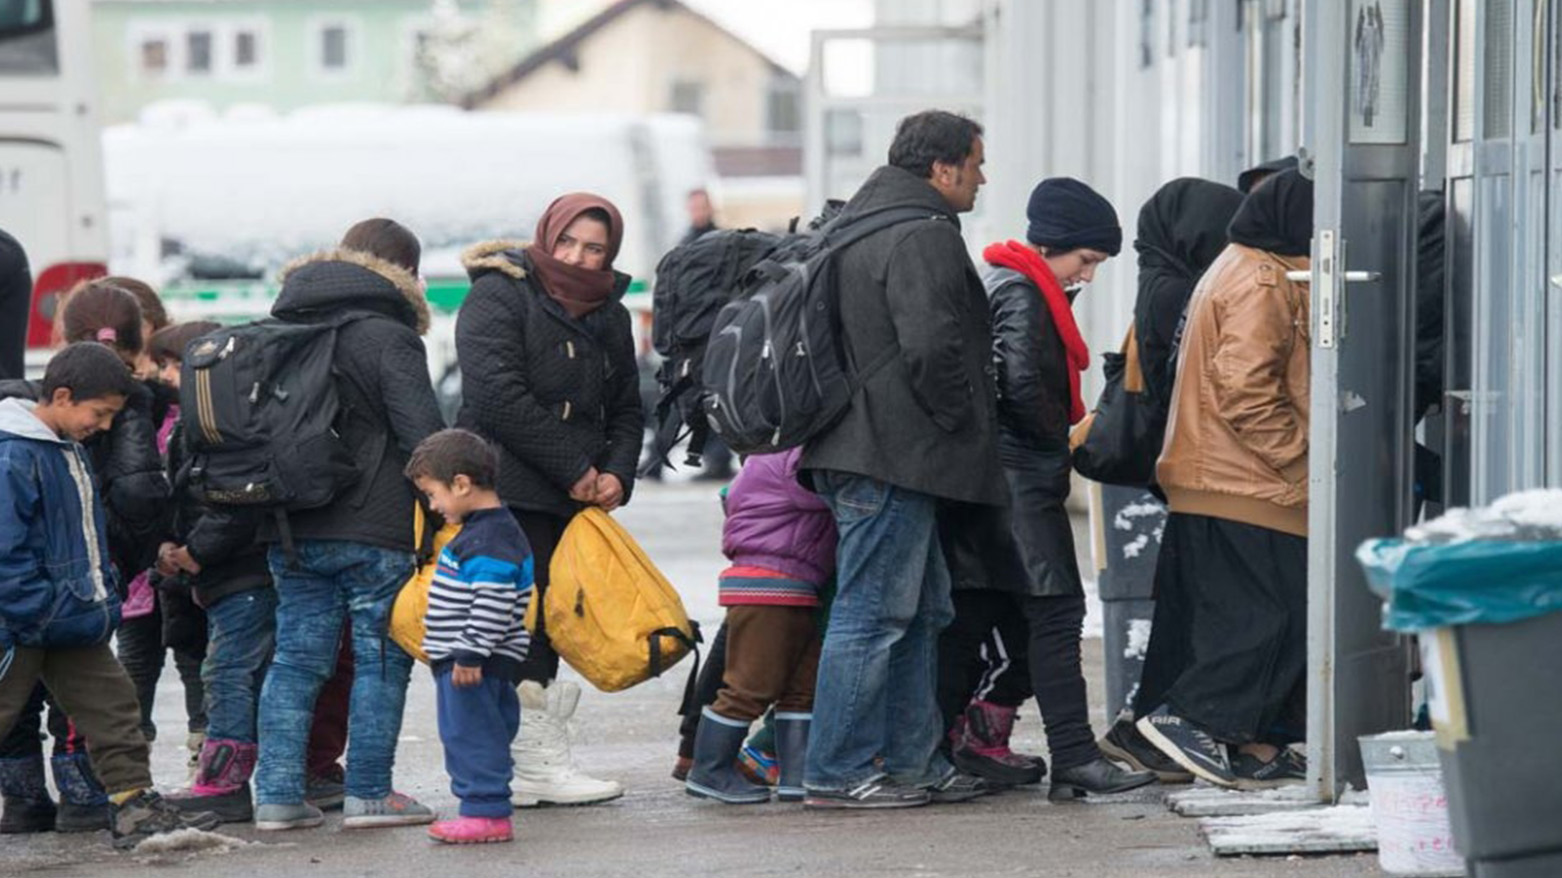 Asylum seekers wait to register in Passau, southern Germany. January 16, 2016. (AFP / DPA / Armin Weigel)